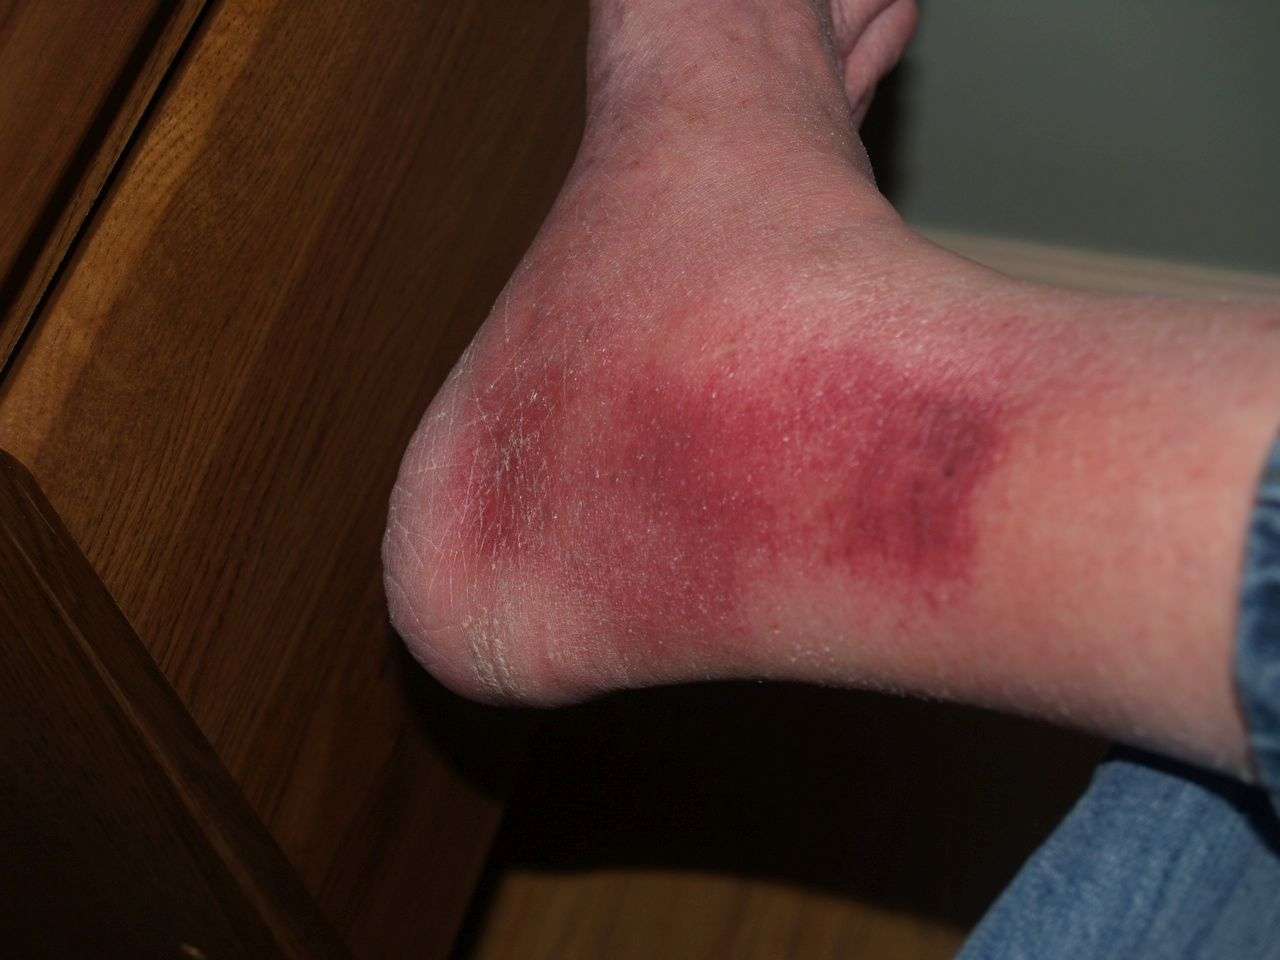 ankle spider bite.